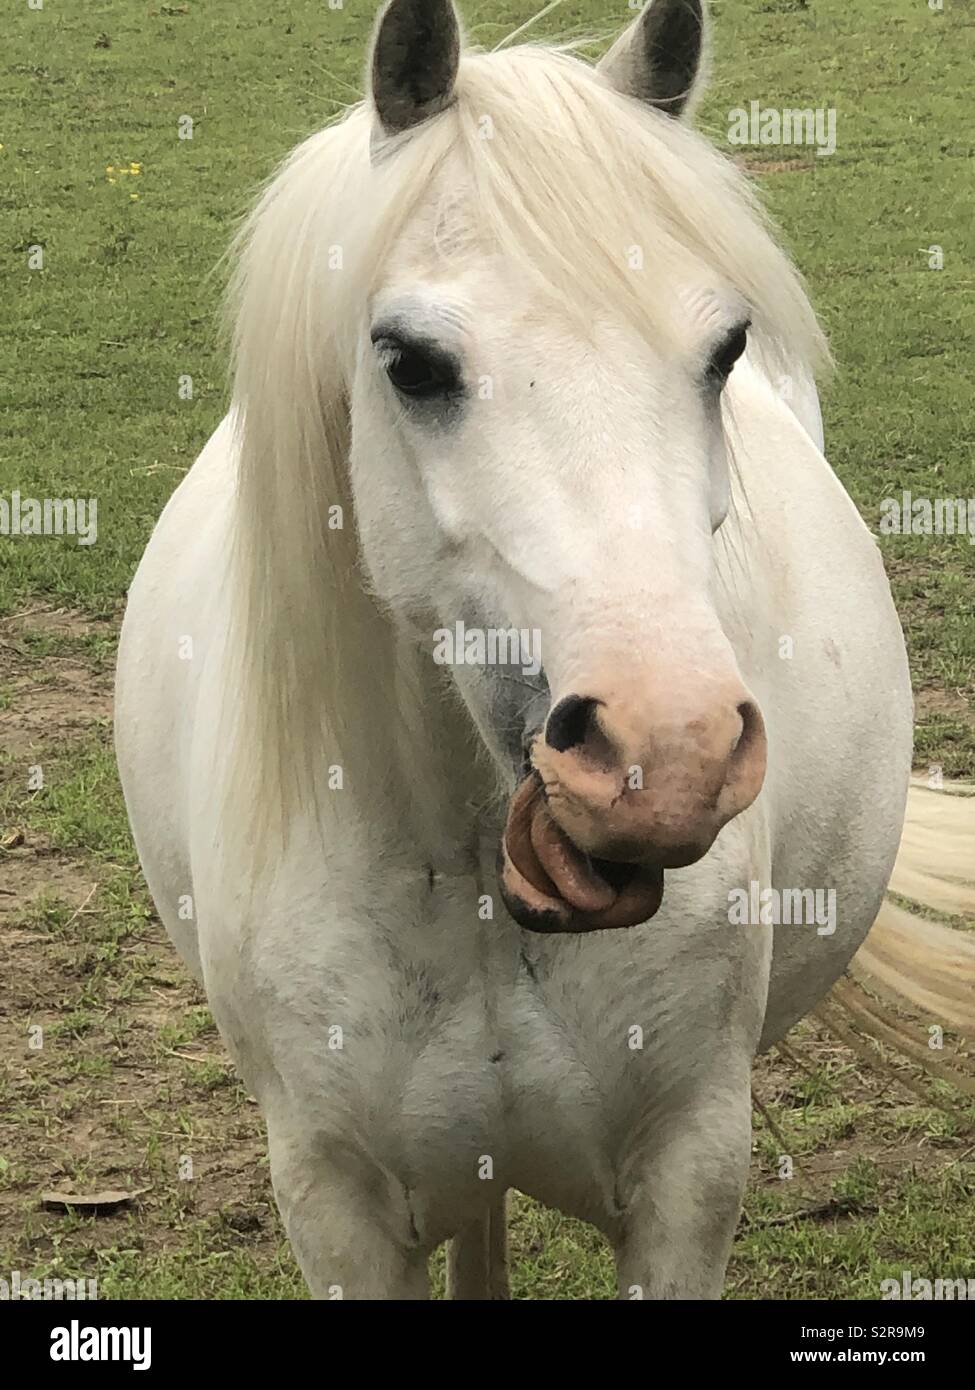 Smiling white horse Stock Photo